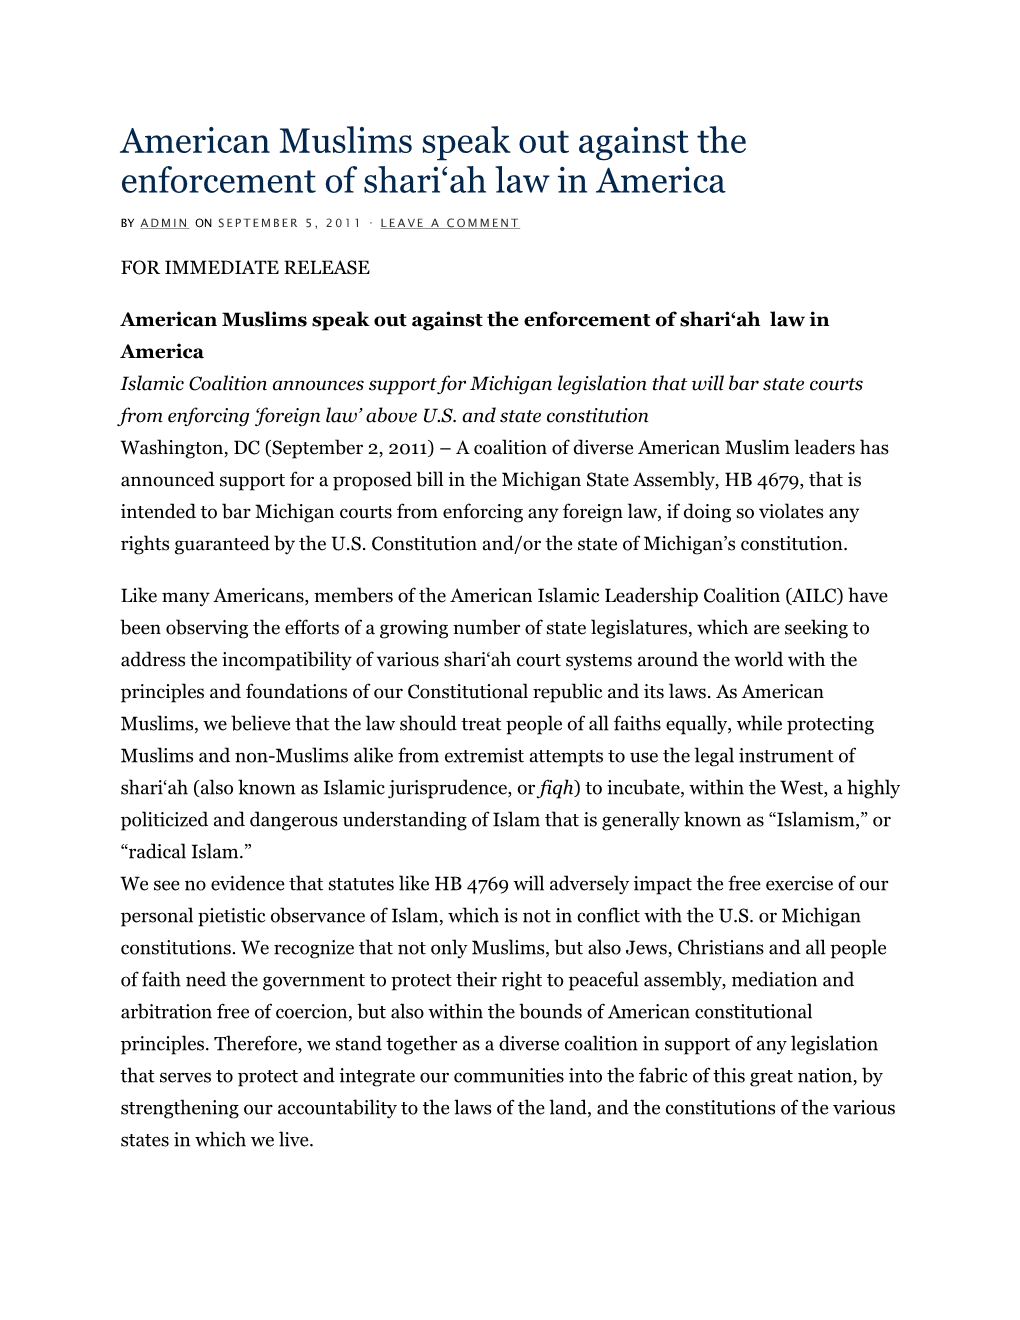 American Muslims Speak out Against the Enforcement of Shari'ah Law In